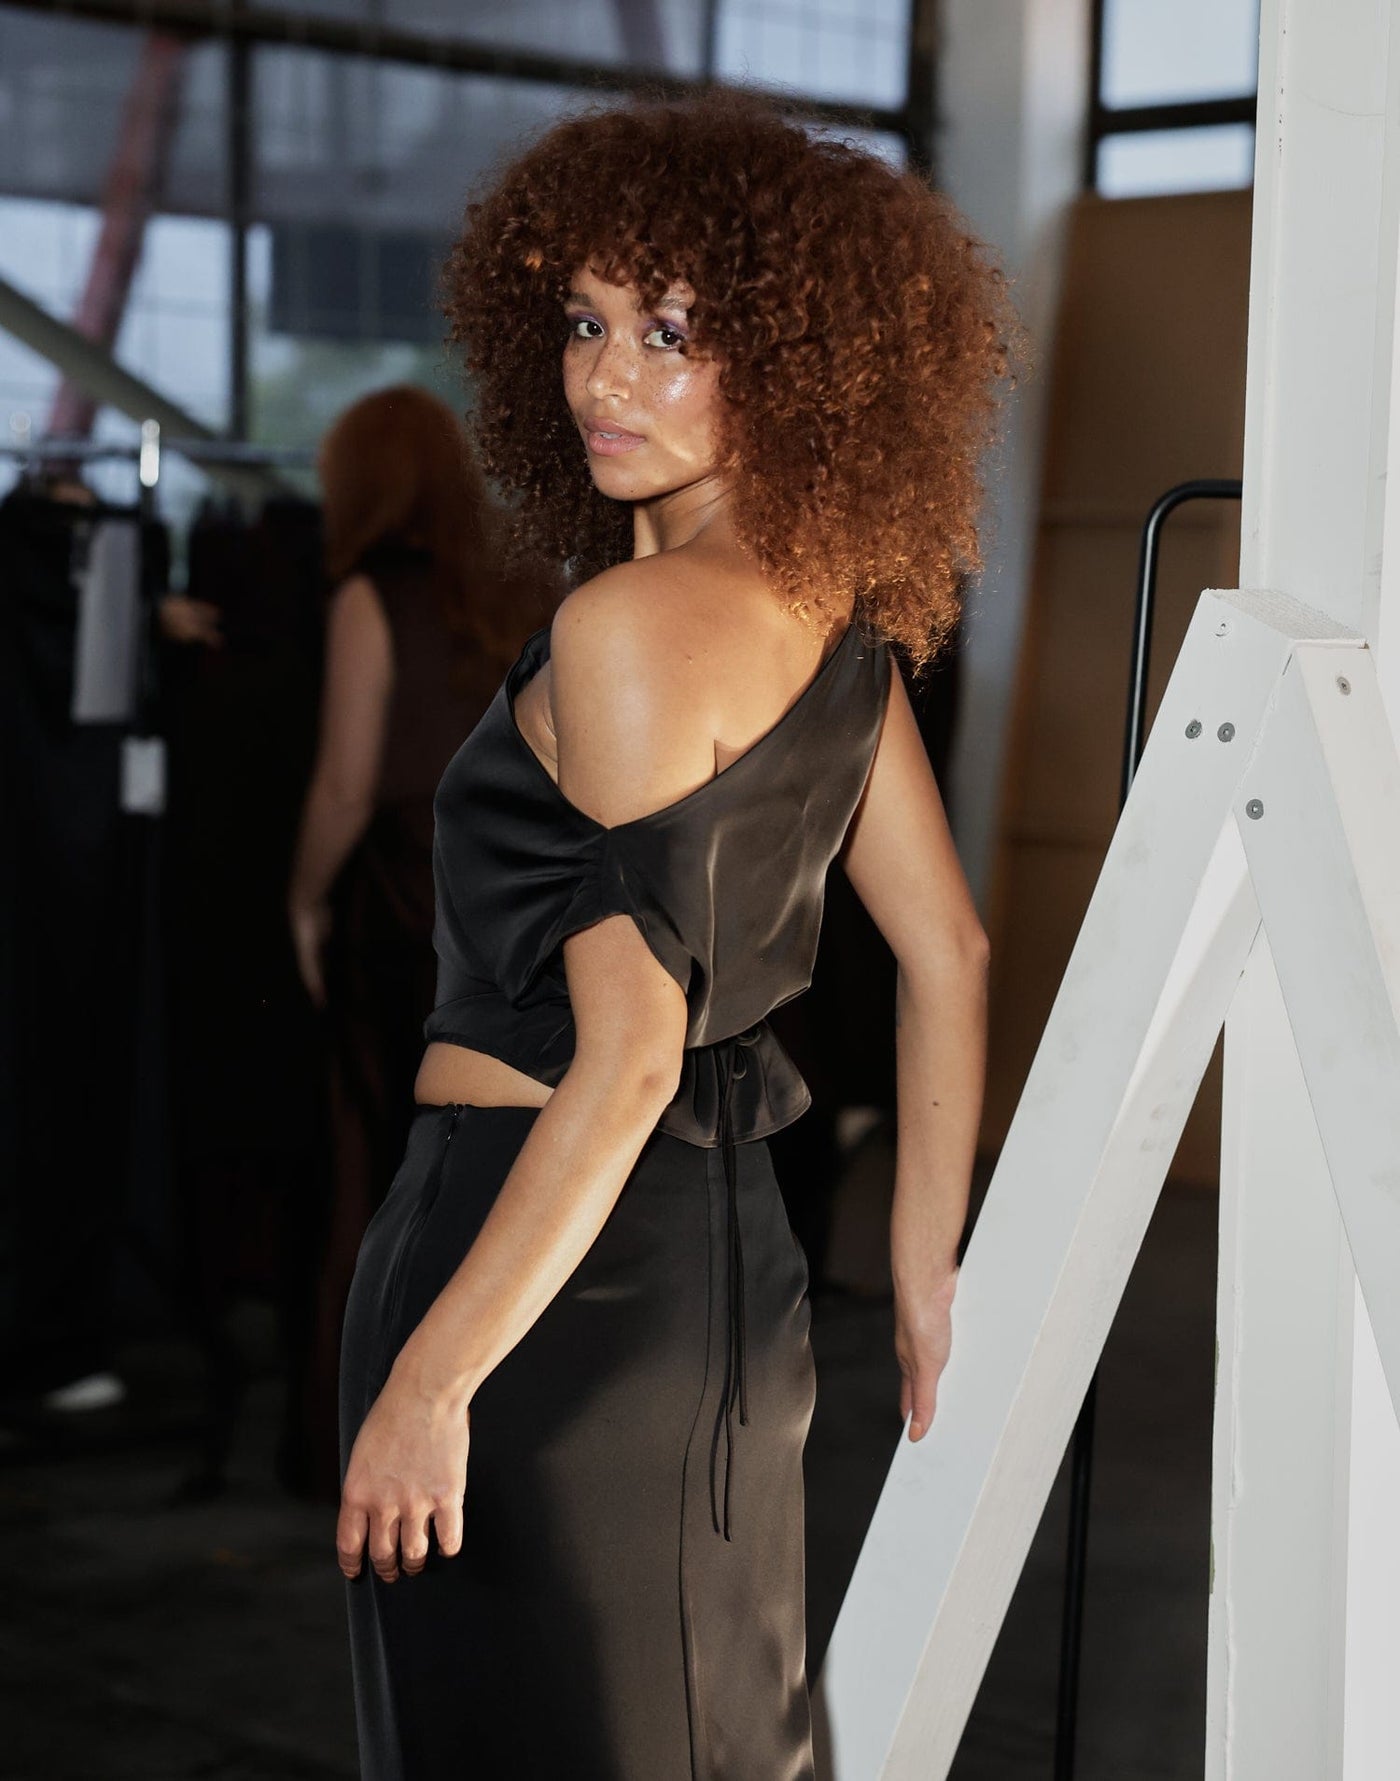 Viviana Top (Black) - Black Silky One Shoulder Crop Top - Women's Top - Charcoal Clothing